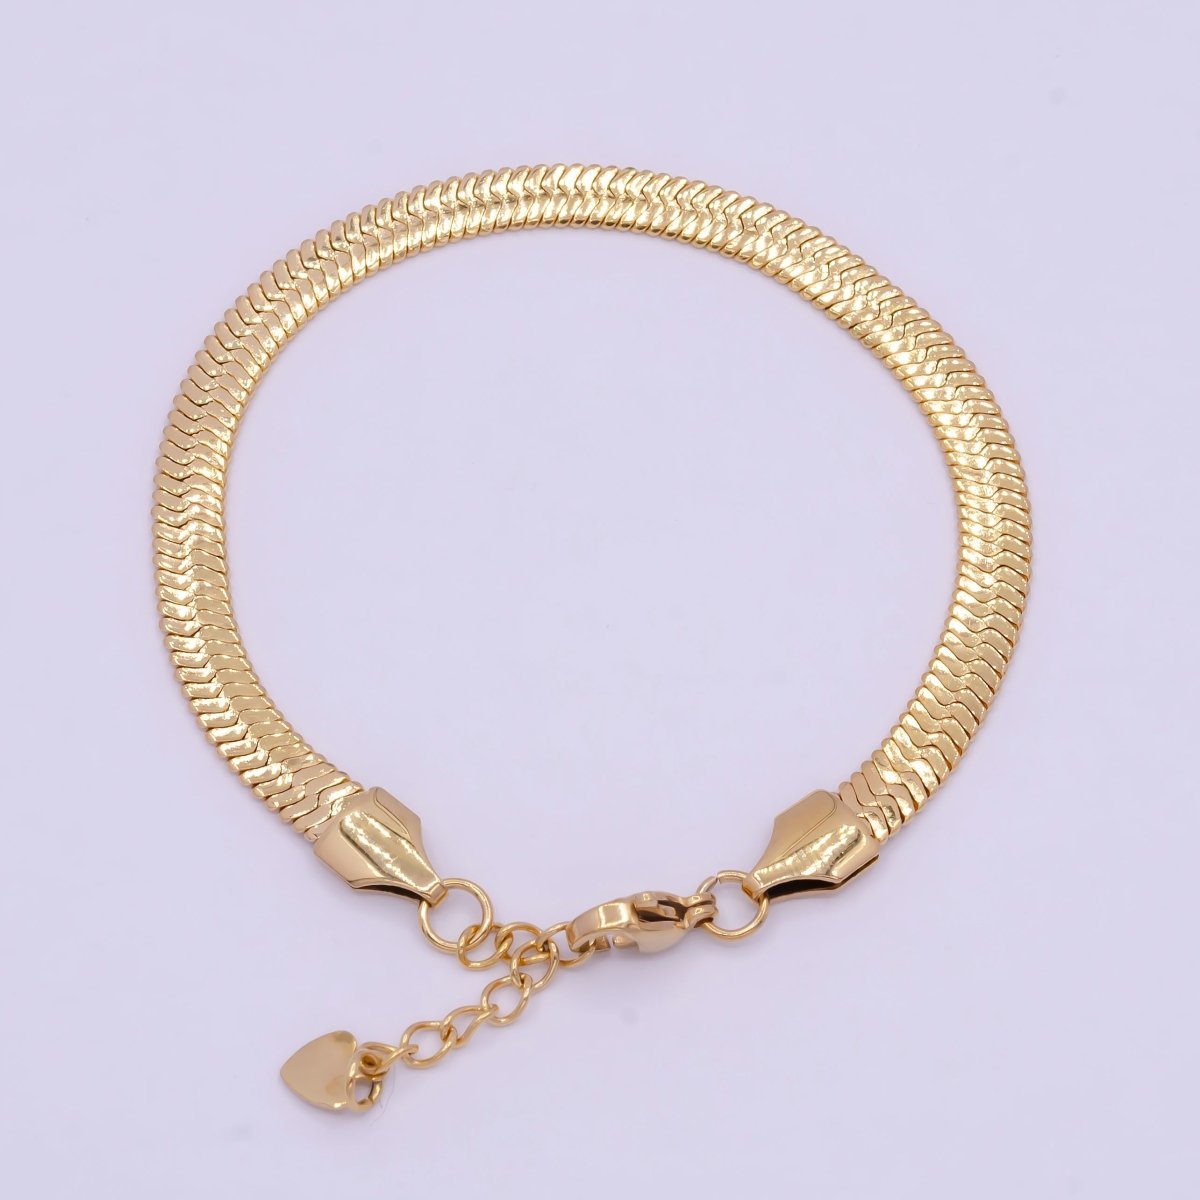 Gold 3mm 4mm 5mm Herringbone Snake Chain Bracelet For Wholesale Bracelet Jewelry Making Supply | WA-924 WA-925 WA-926 Clearance Pricing - DLUXCA